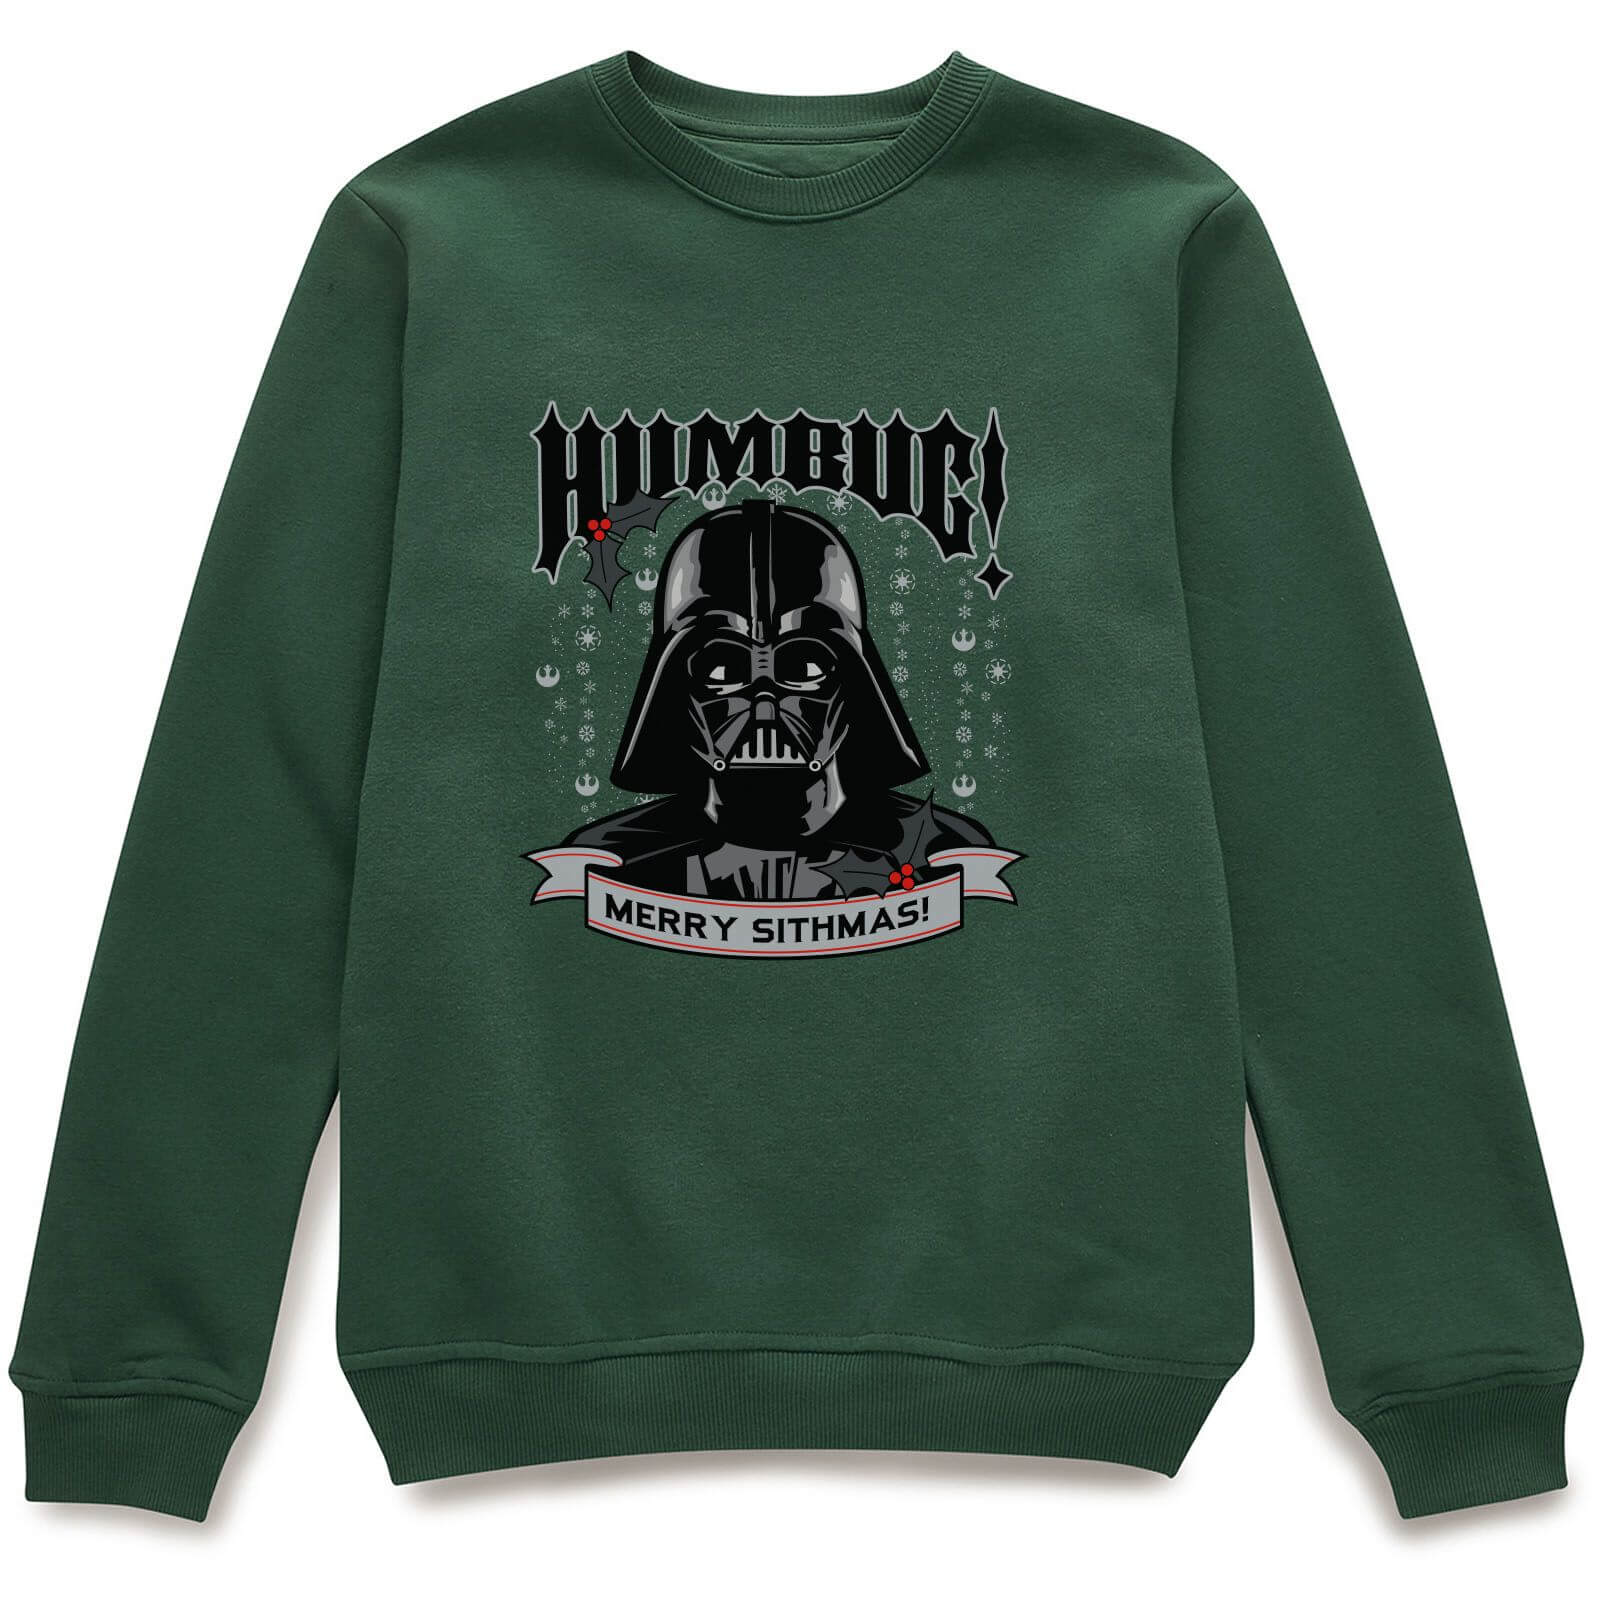 Star Wars Darth Vader Merry Sithmas Green Christmas Sweatshirt - XL